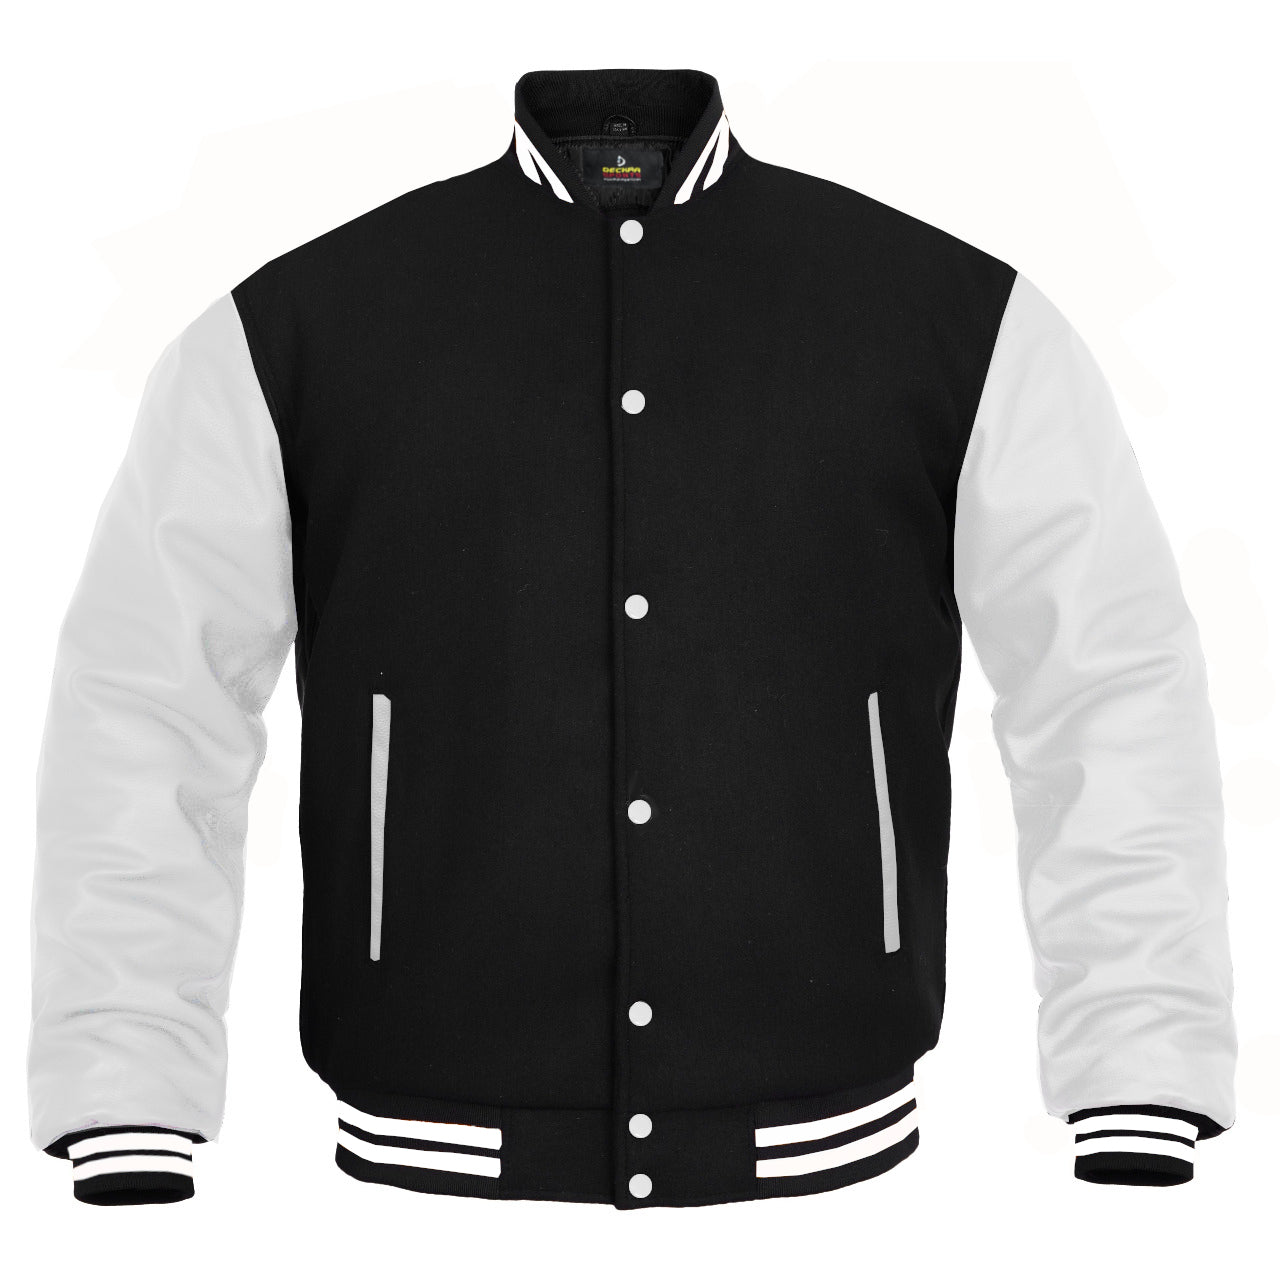 Women Varsity Jacket Wool+Genuine Leather Letterman Baseball Winter Jacket Black/White